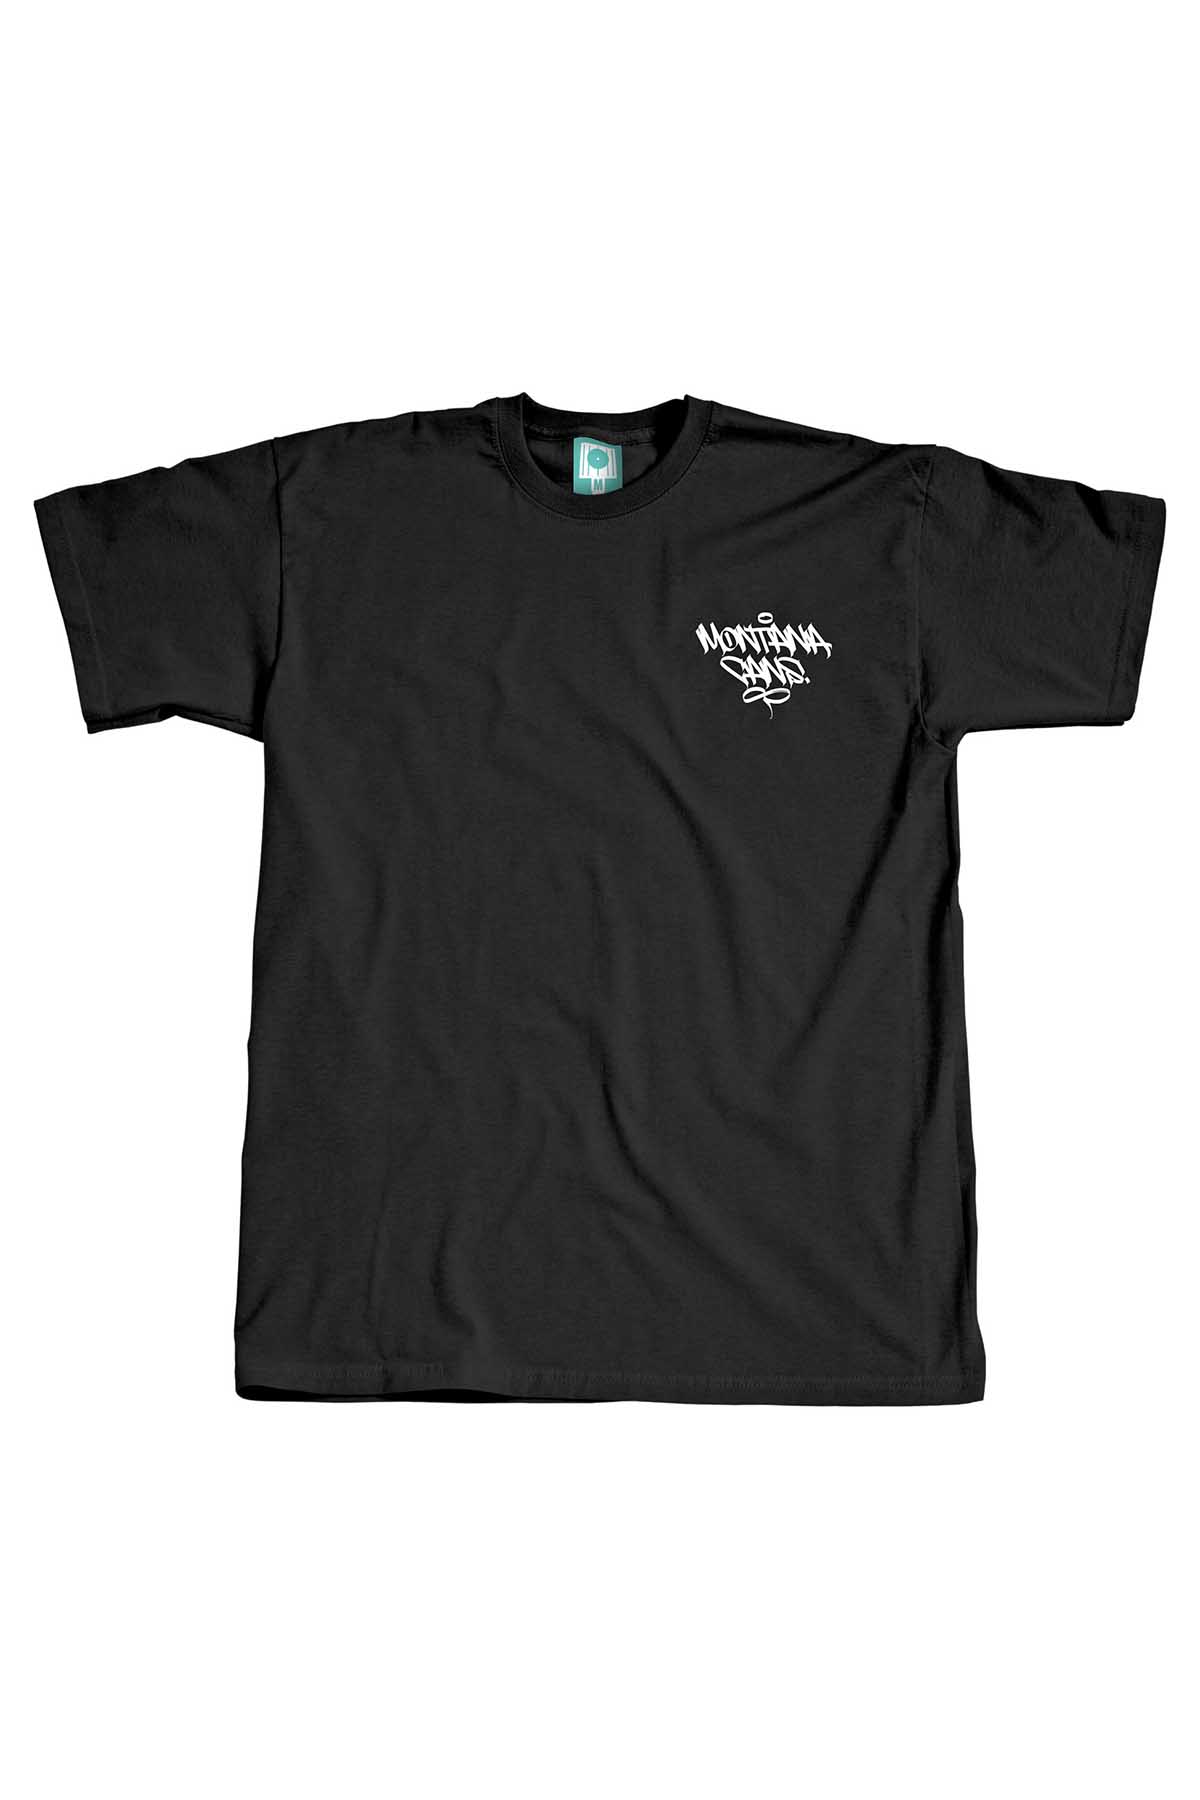 Montana MC TAG Black T-Shirt by Sicoer